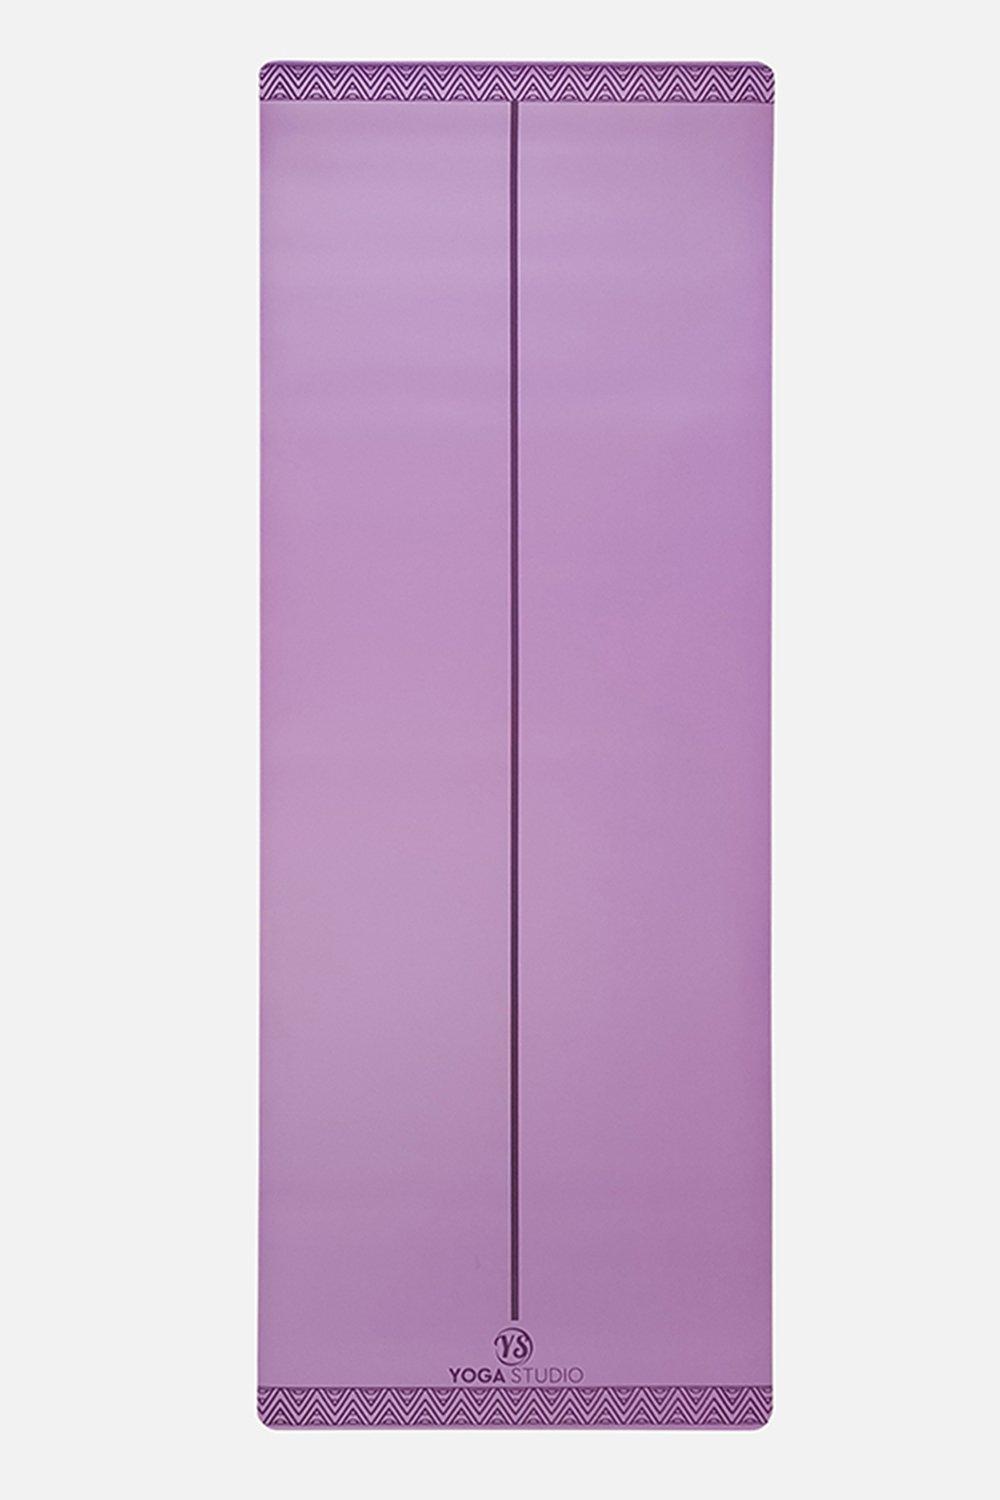 Yoga Studio The Grip Alignment Yoga Mat 4mm|purple